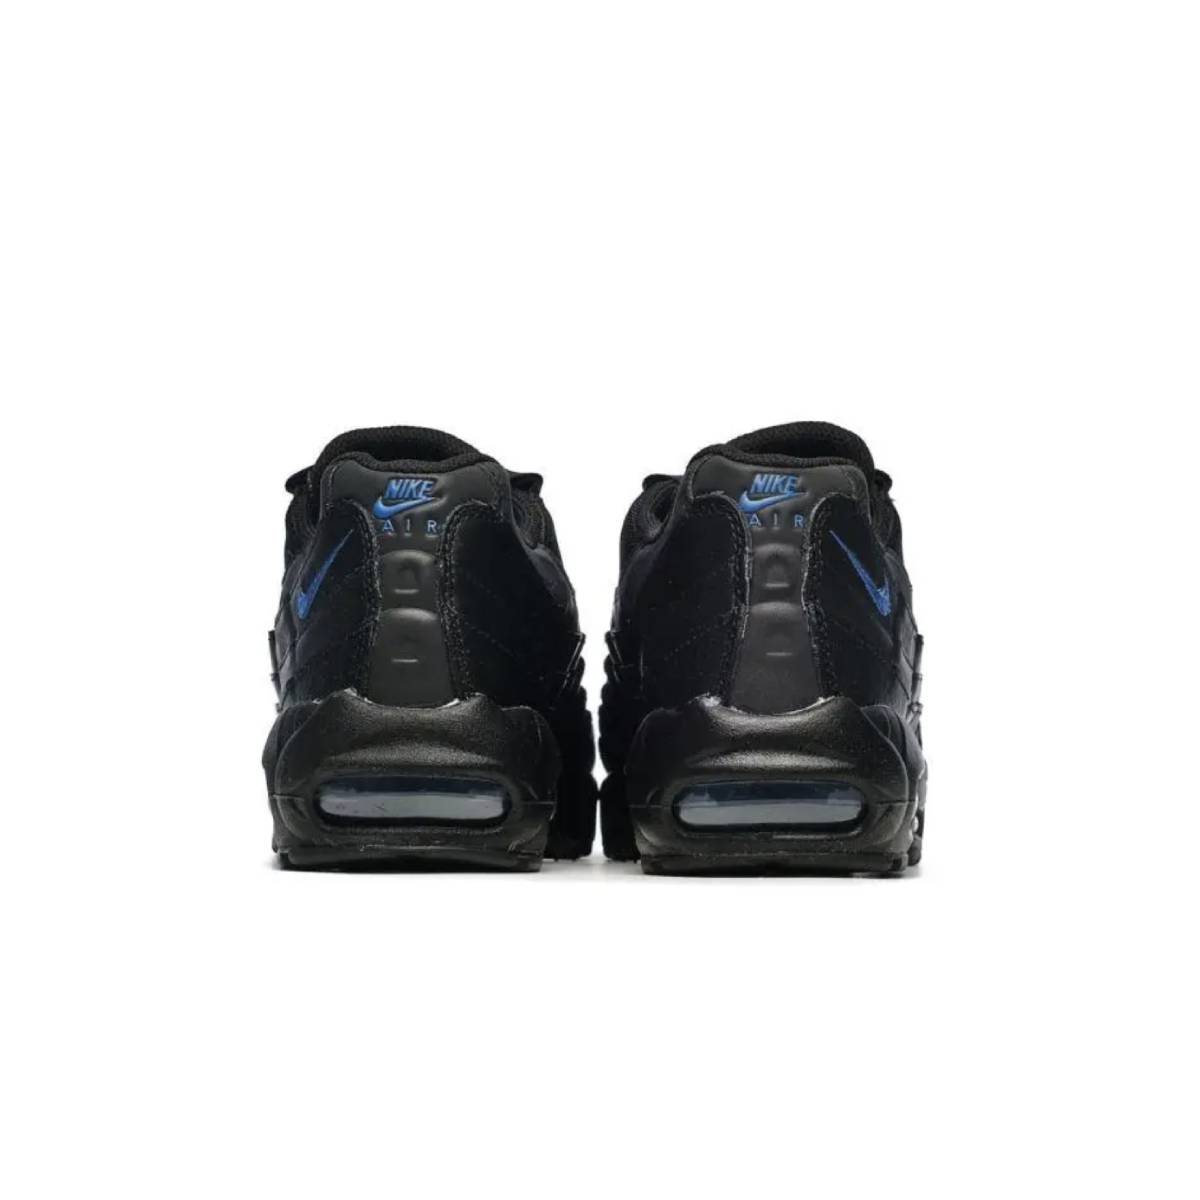 Nike Men's Air Max 95 Black Reflective